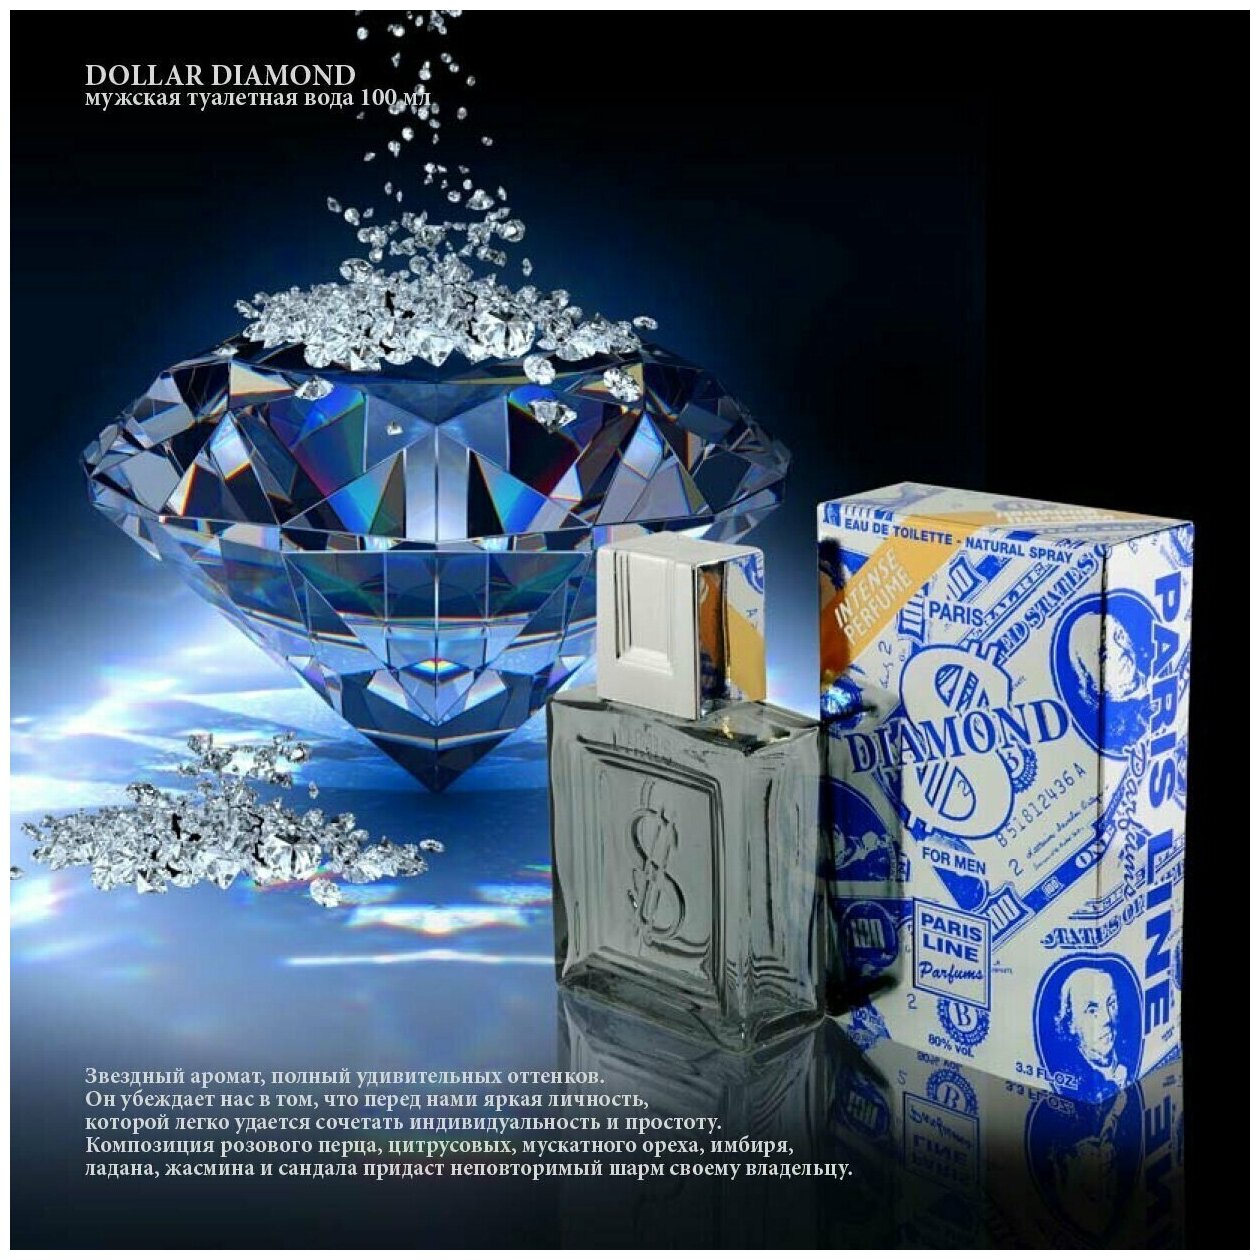 Dollar Diamond INTENSE PERFUME (Доллар Даймонд двойной парфюм)Т/В муж. 100 мл